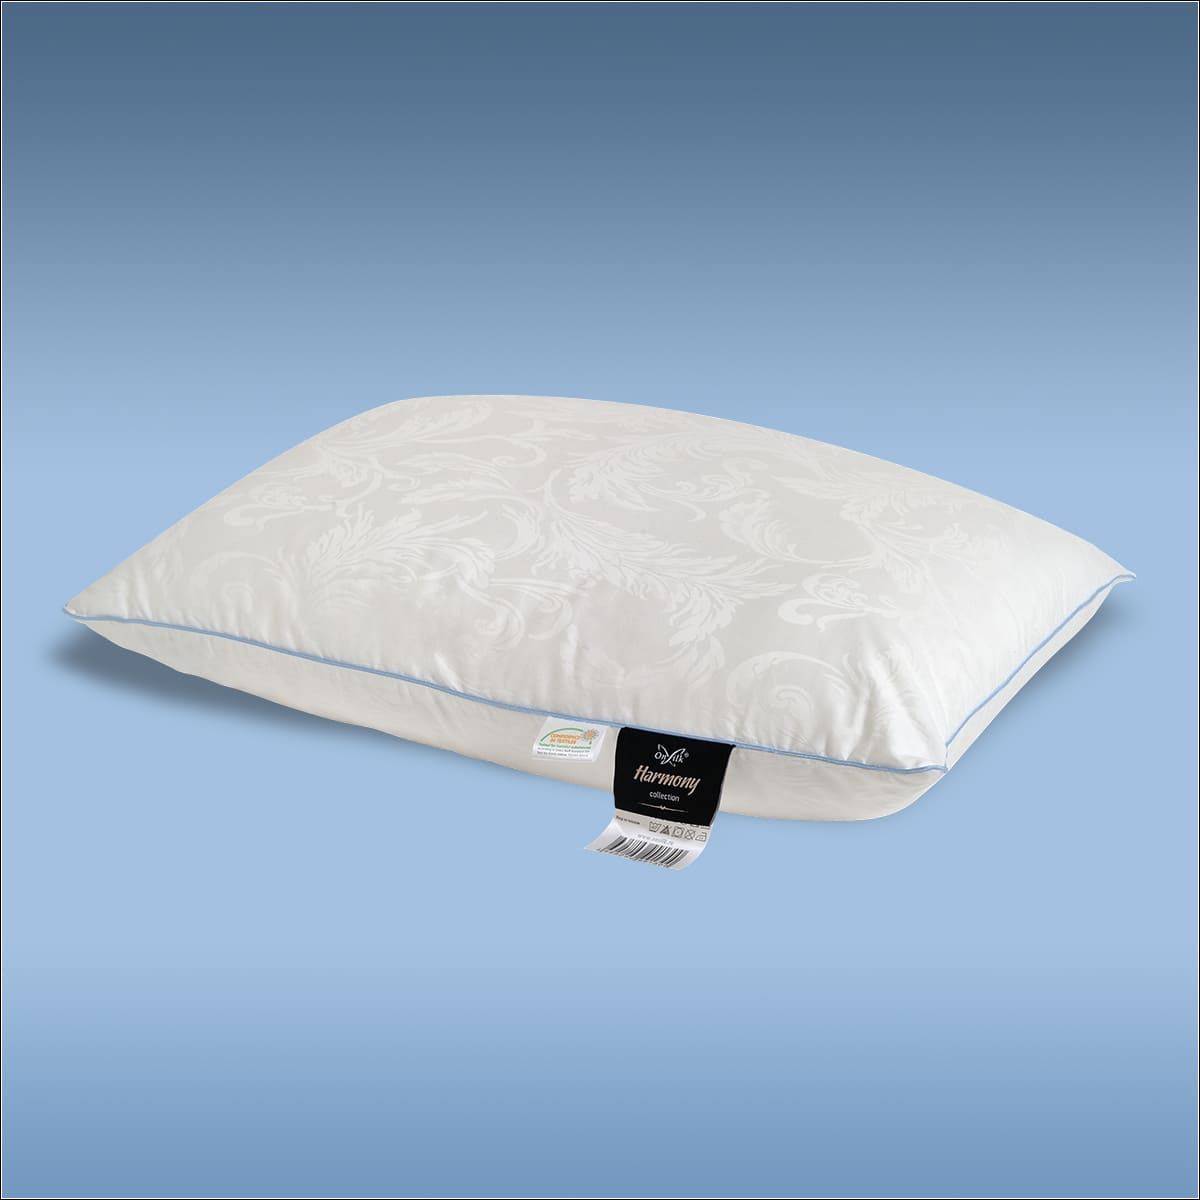 Шeлковая подушка On silk Harmony XL высокая / упругая